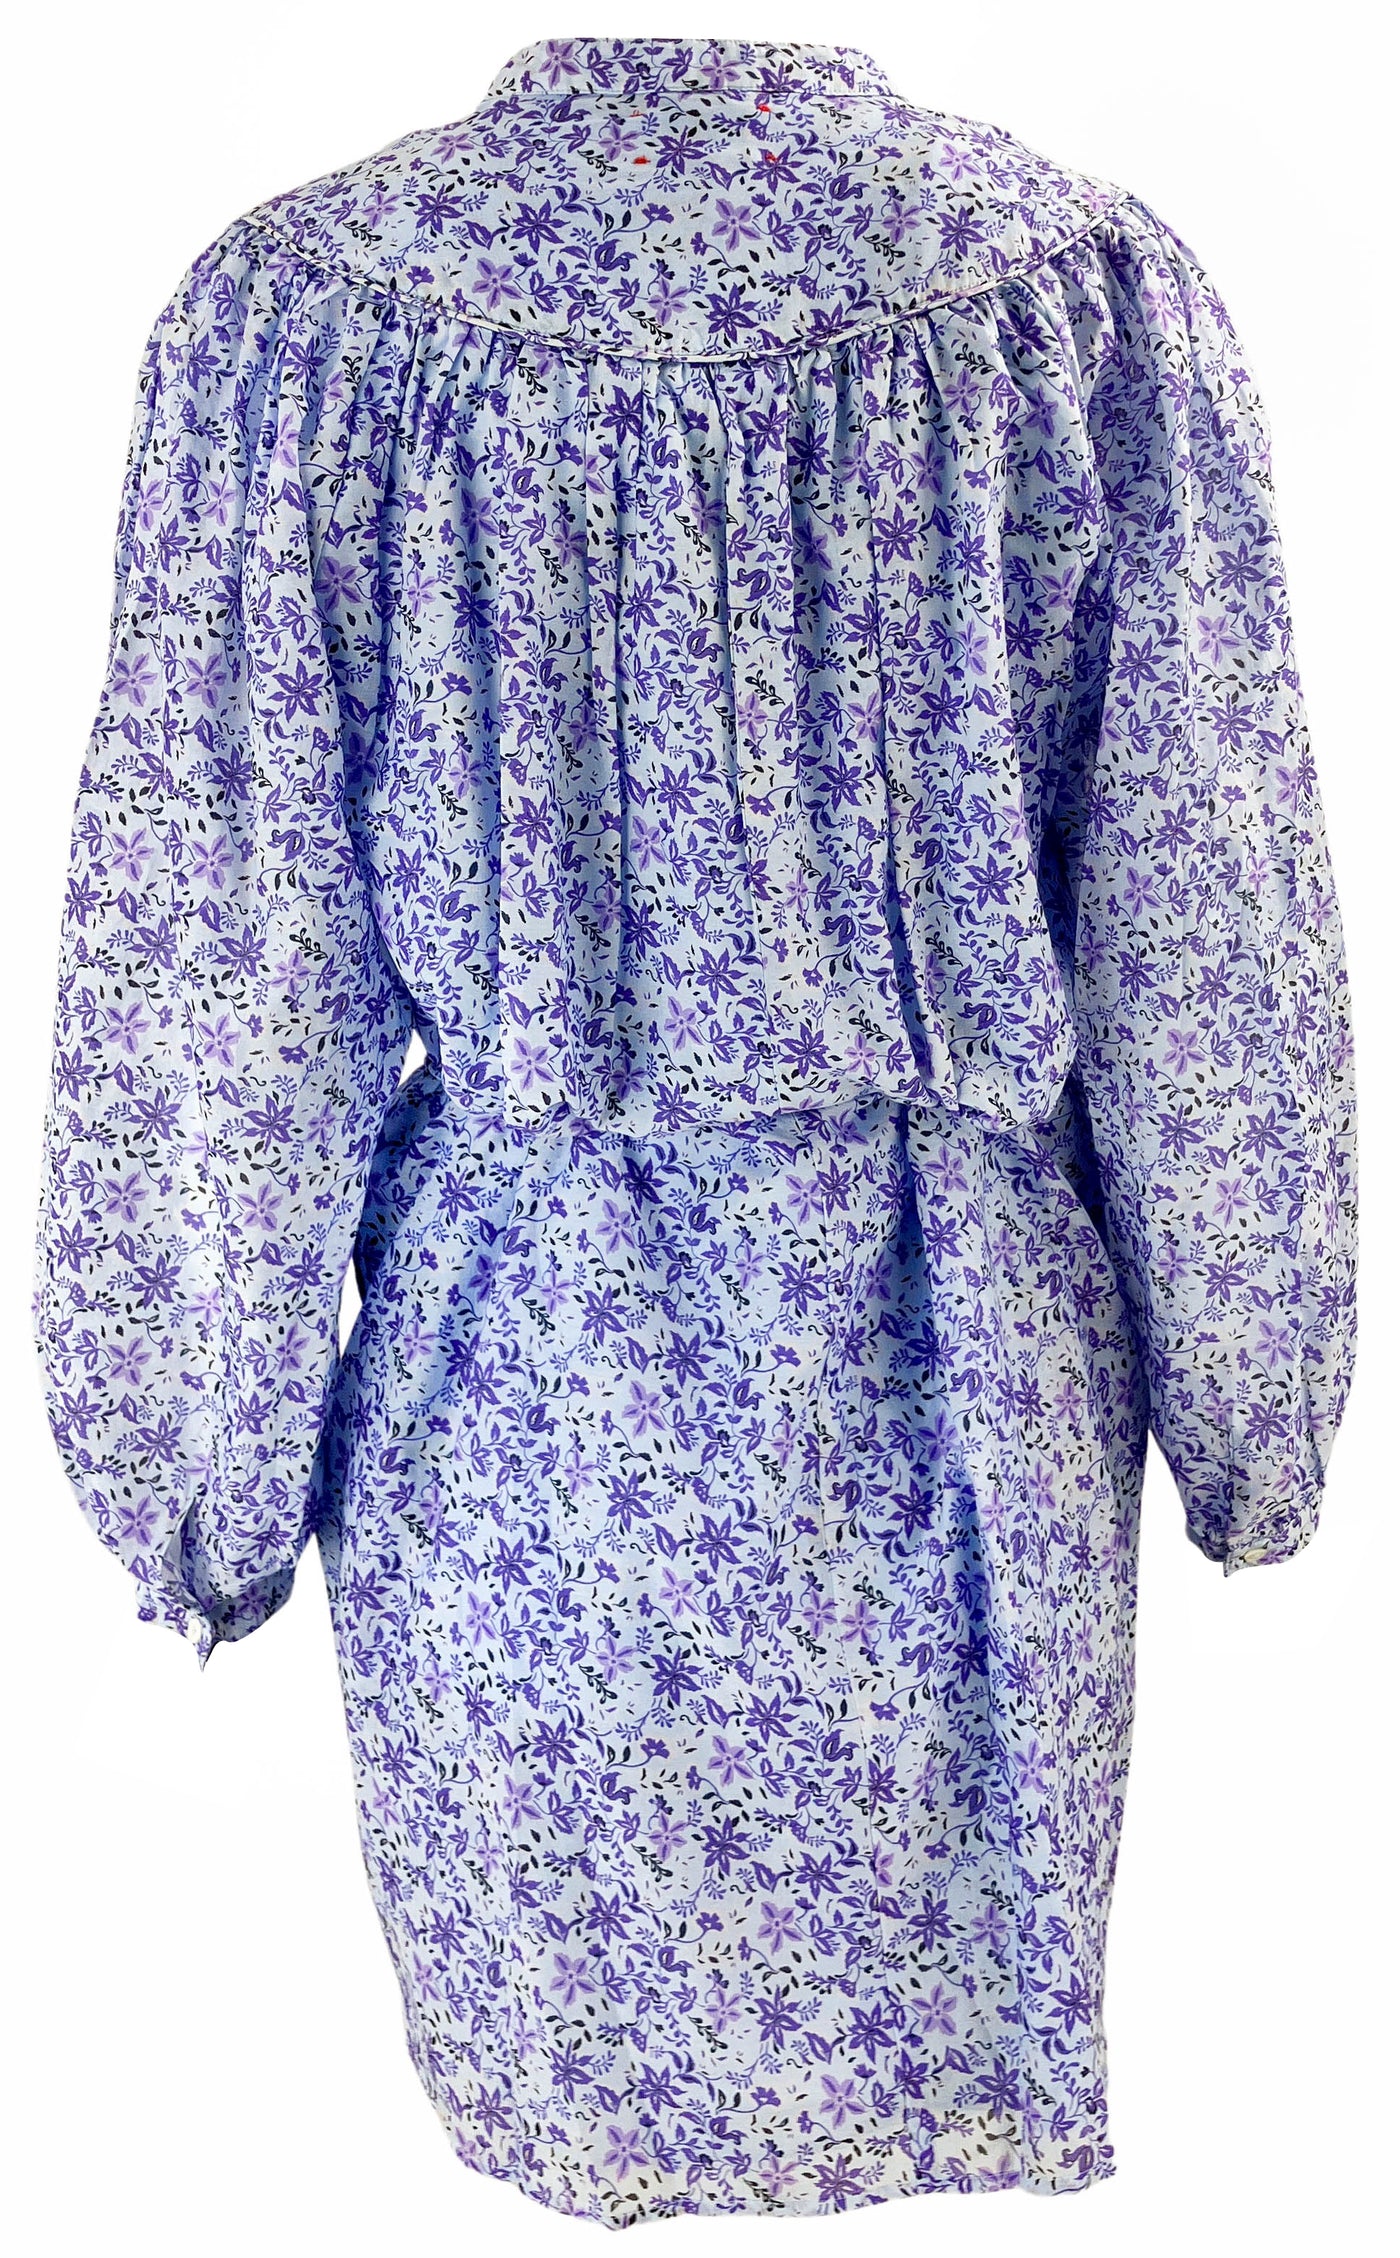 Xírena Bellamy Dress in Blue Willow - Discounts on Xírena at UAL